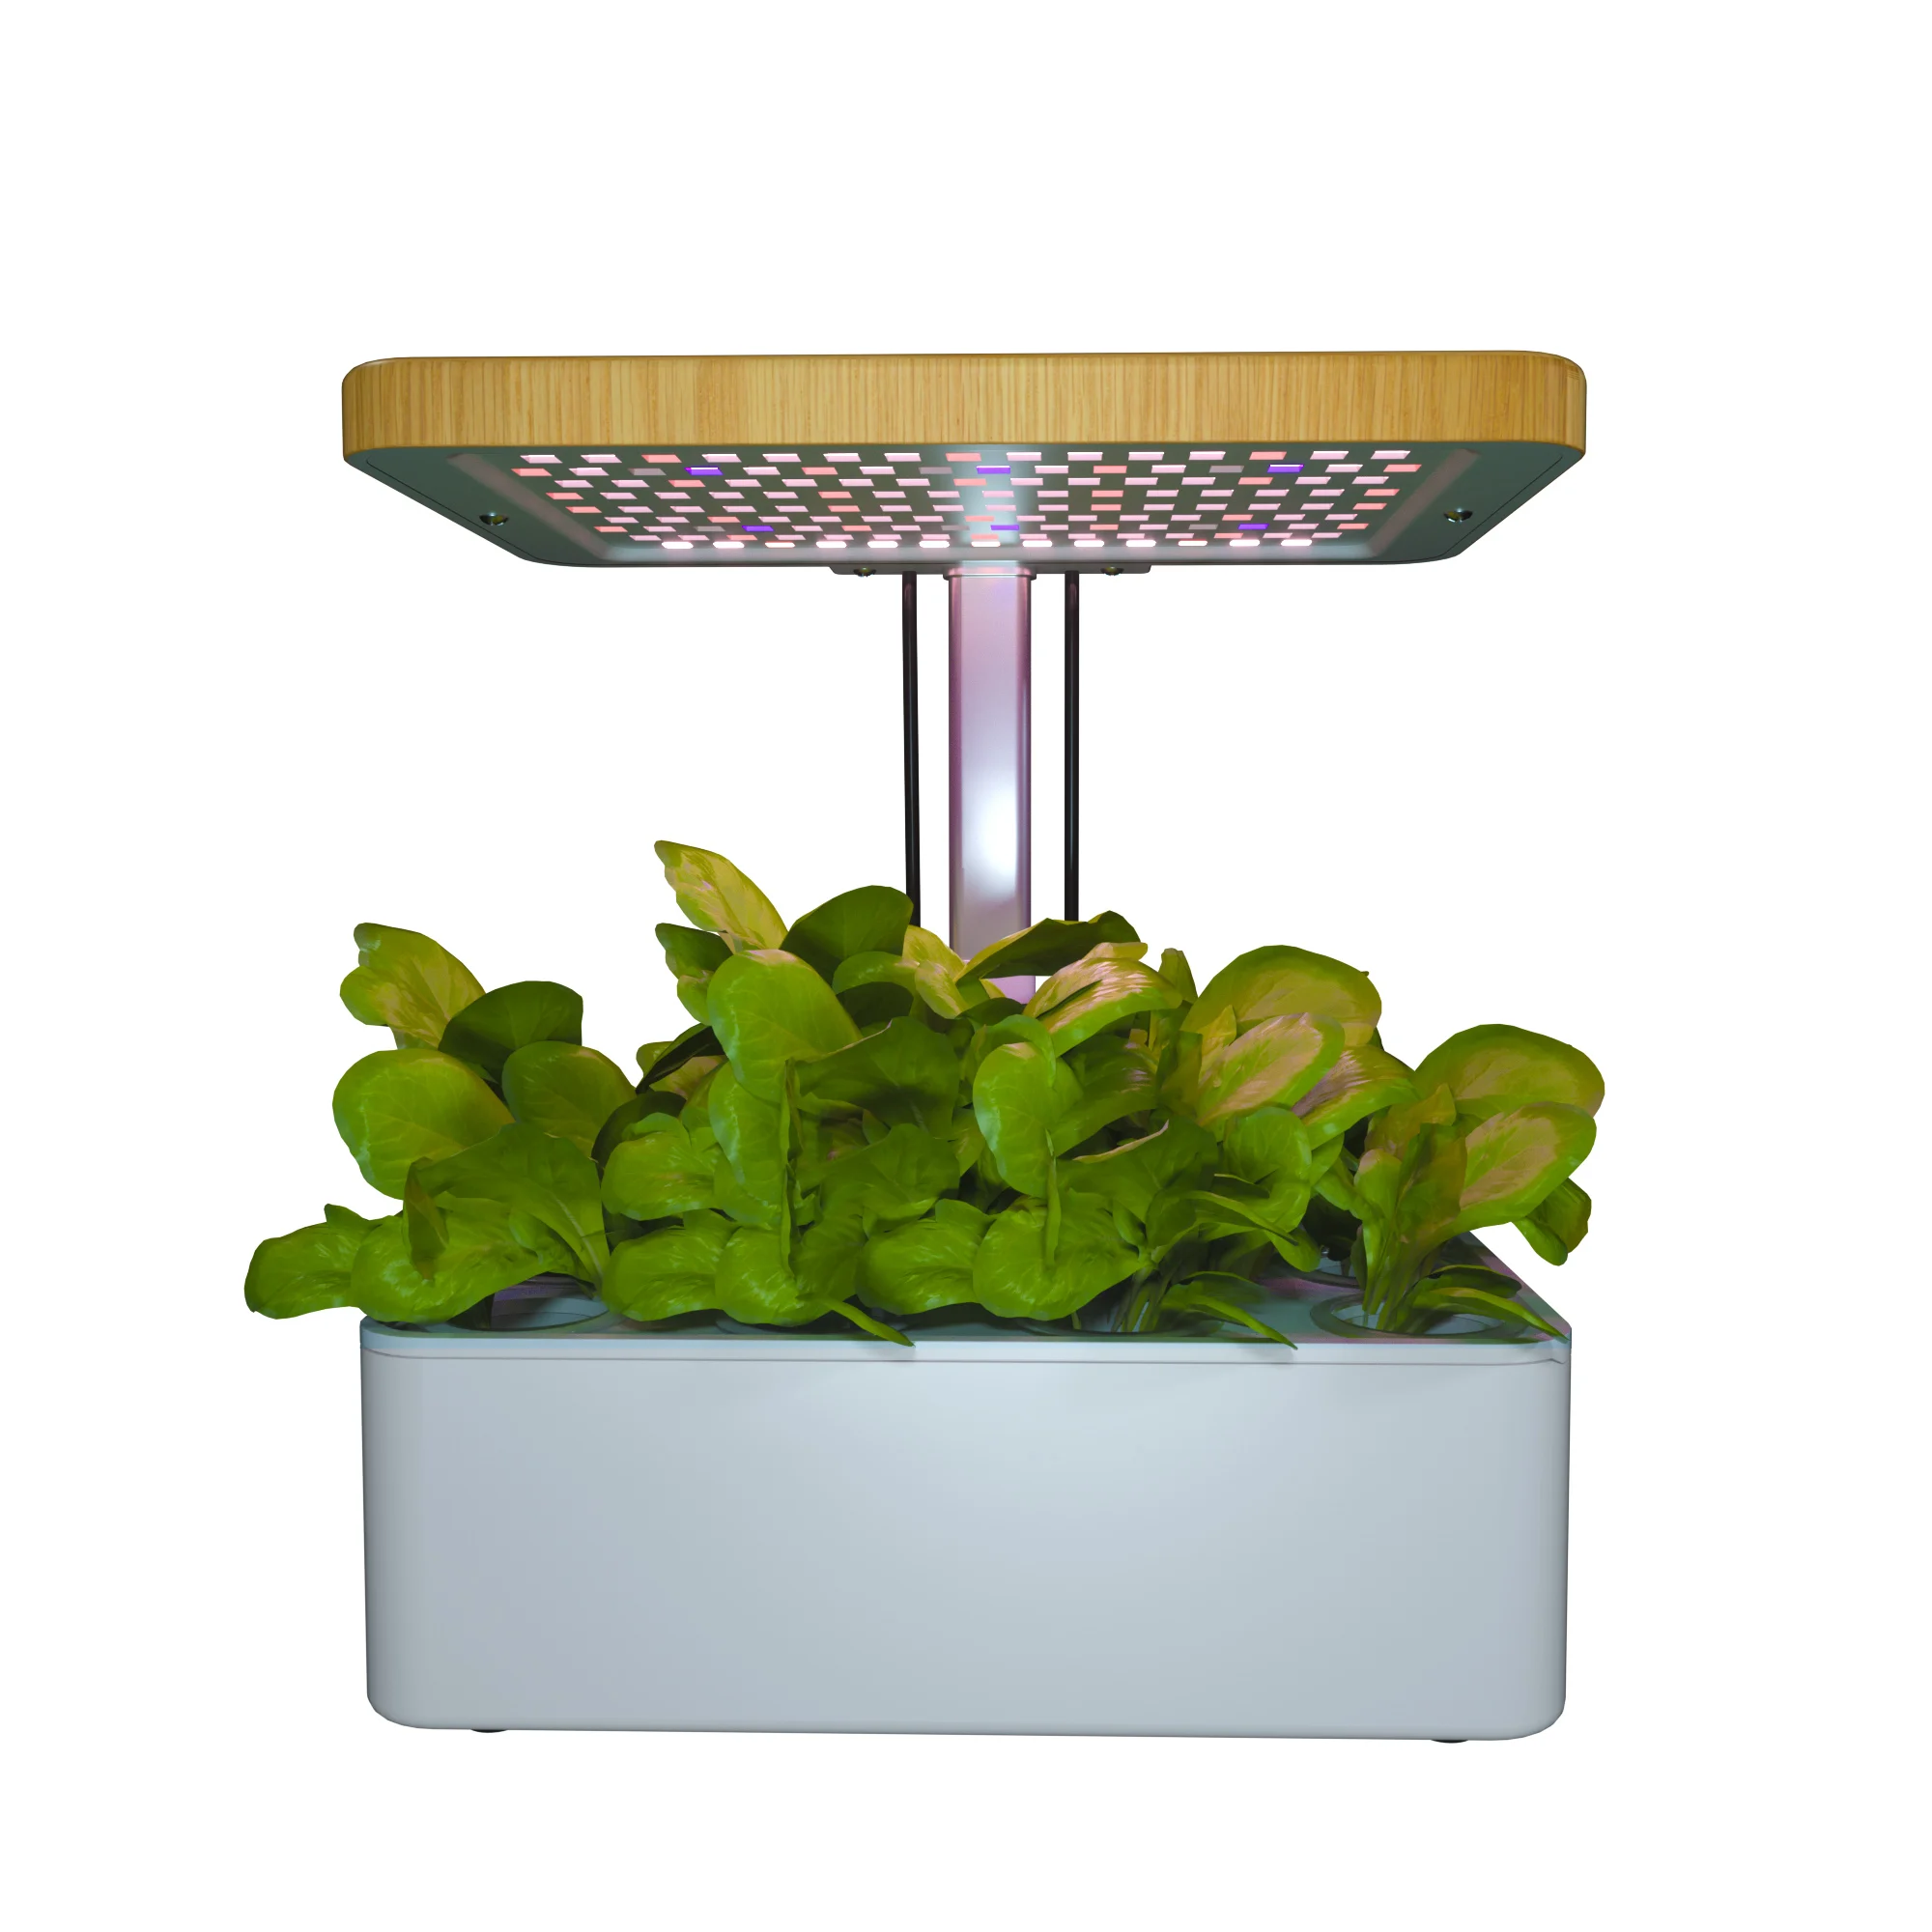 

Height Adjustable Indoor Intelligent Garden Starter Kit LED Grow Light Hydroponics Growing System Smart Garden With 12 slots, White